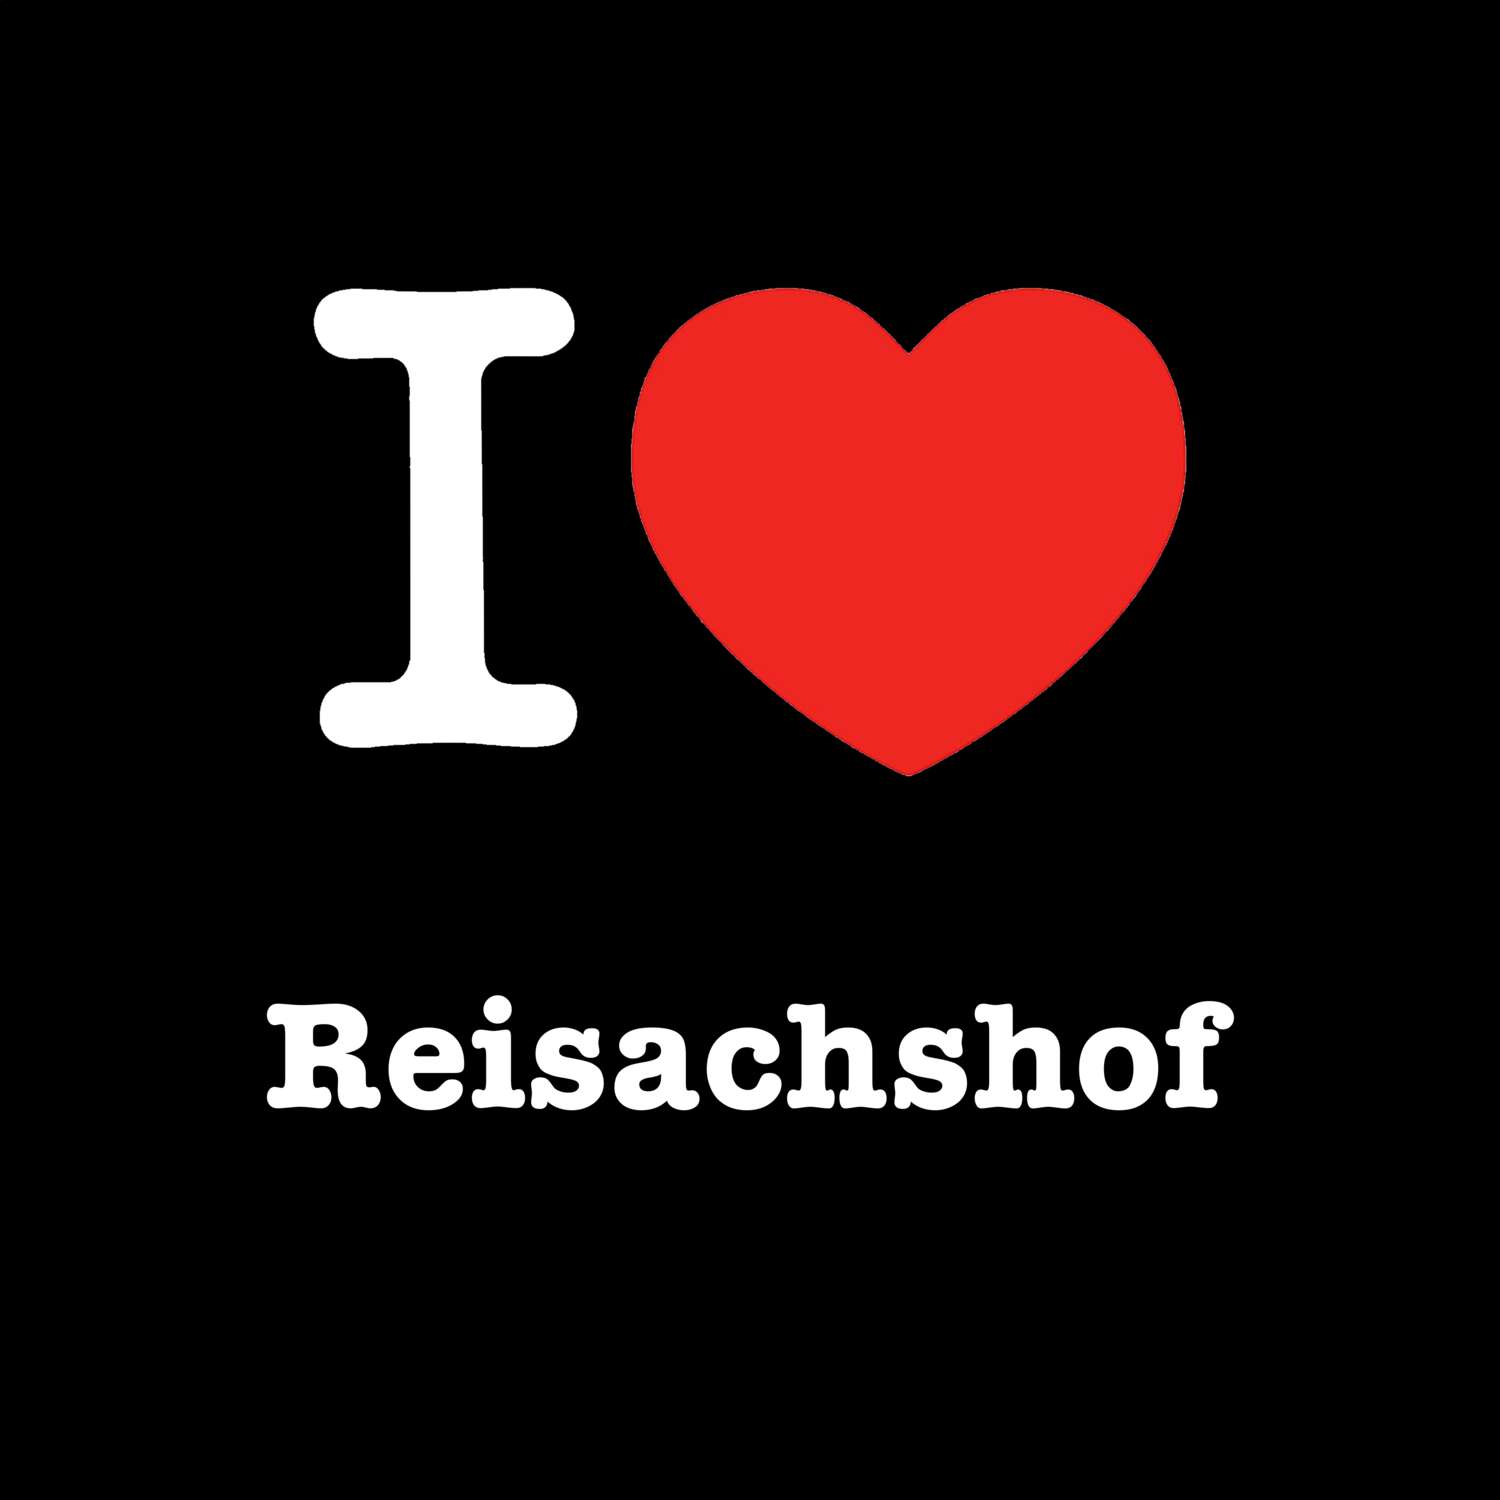 Reisachshof T-Shirt »I love«